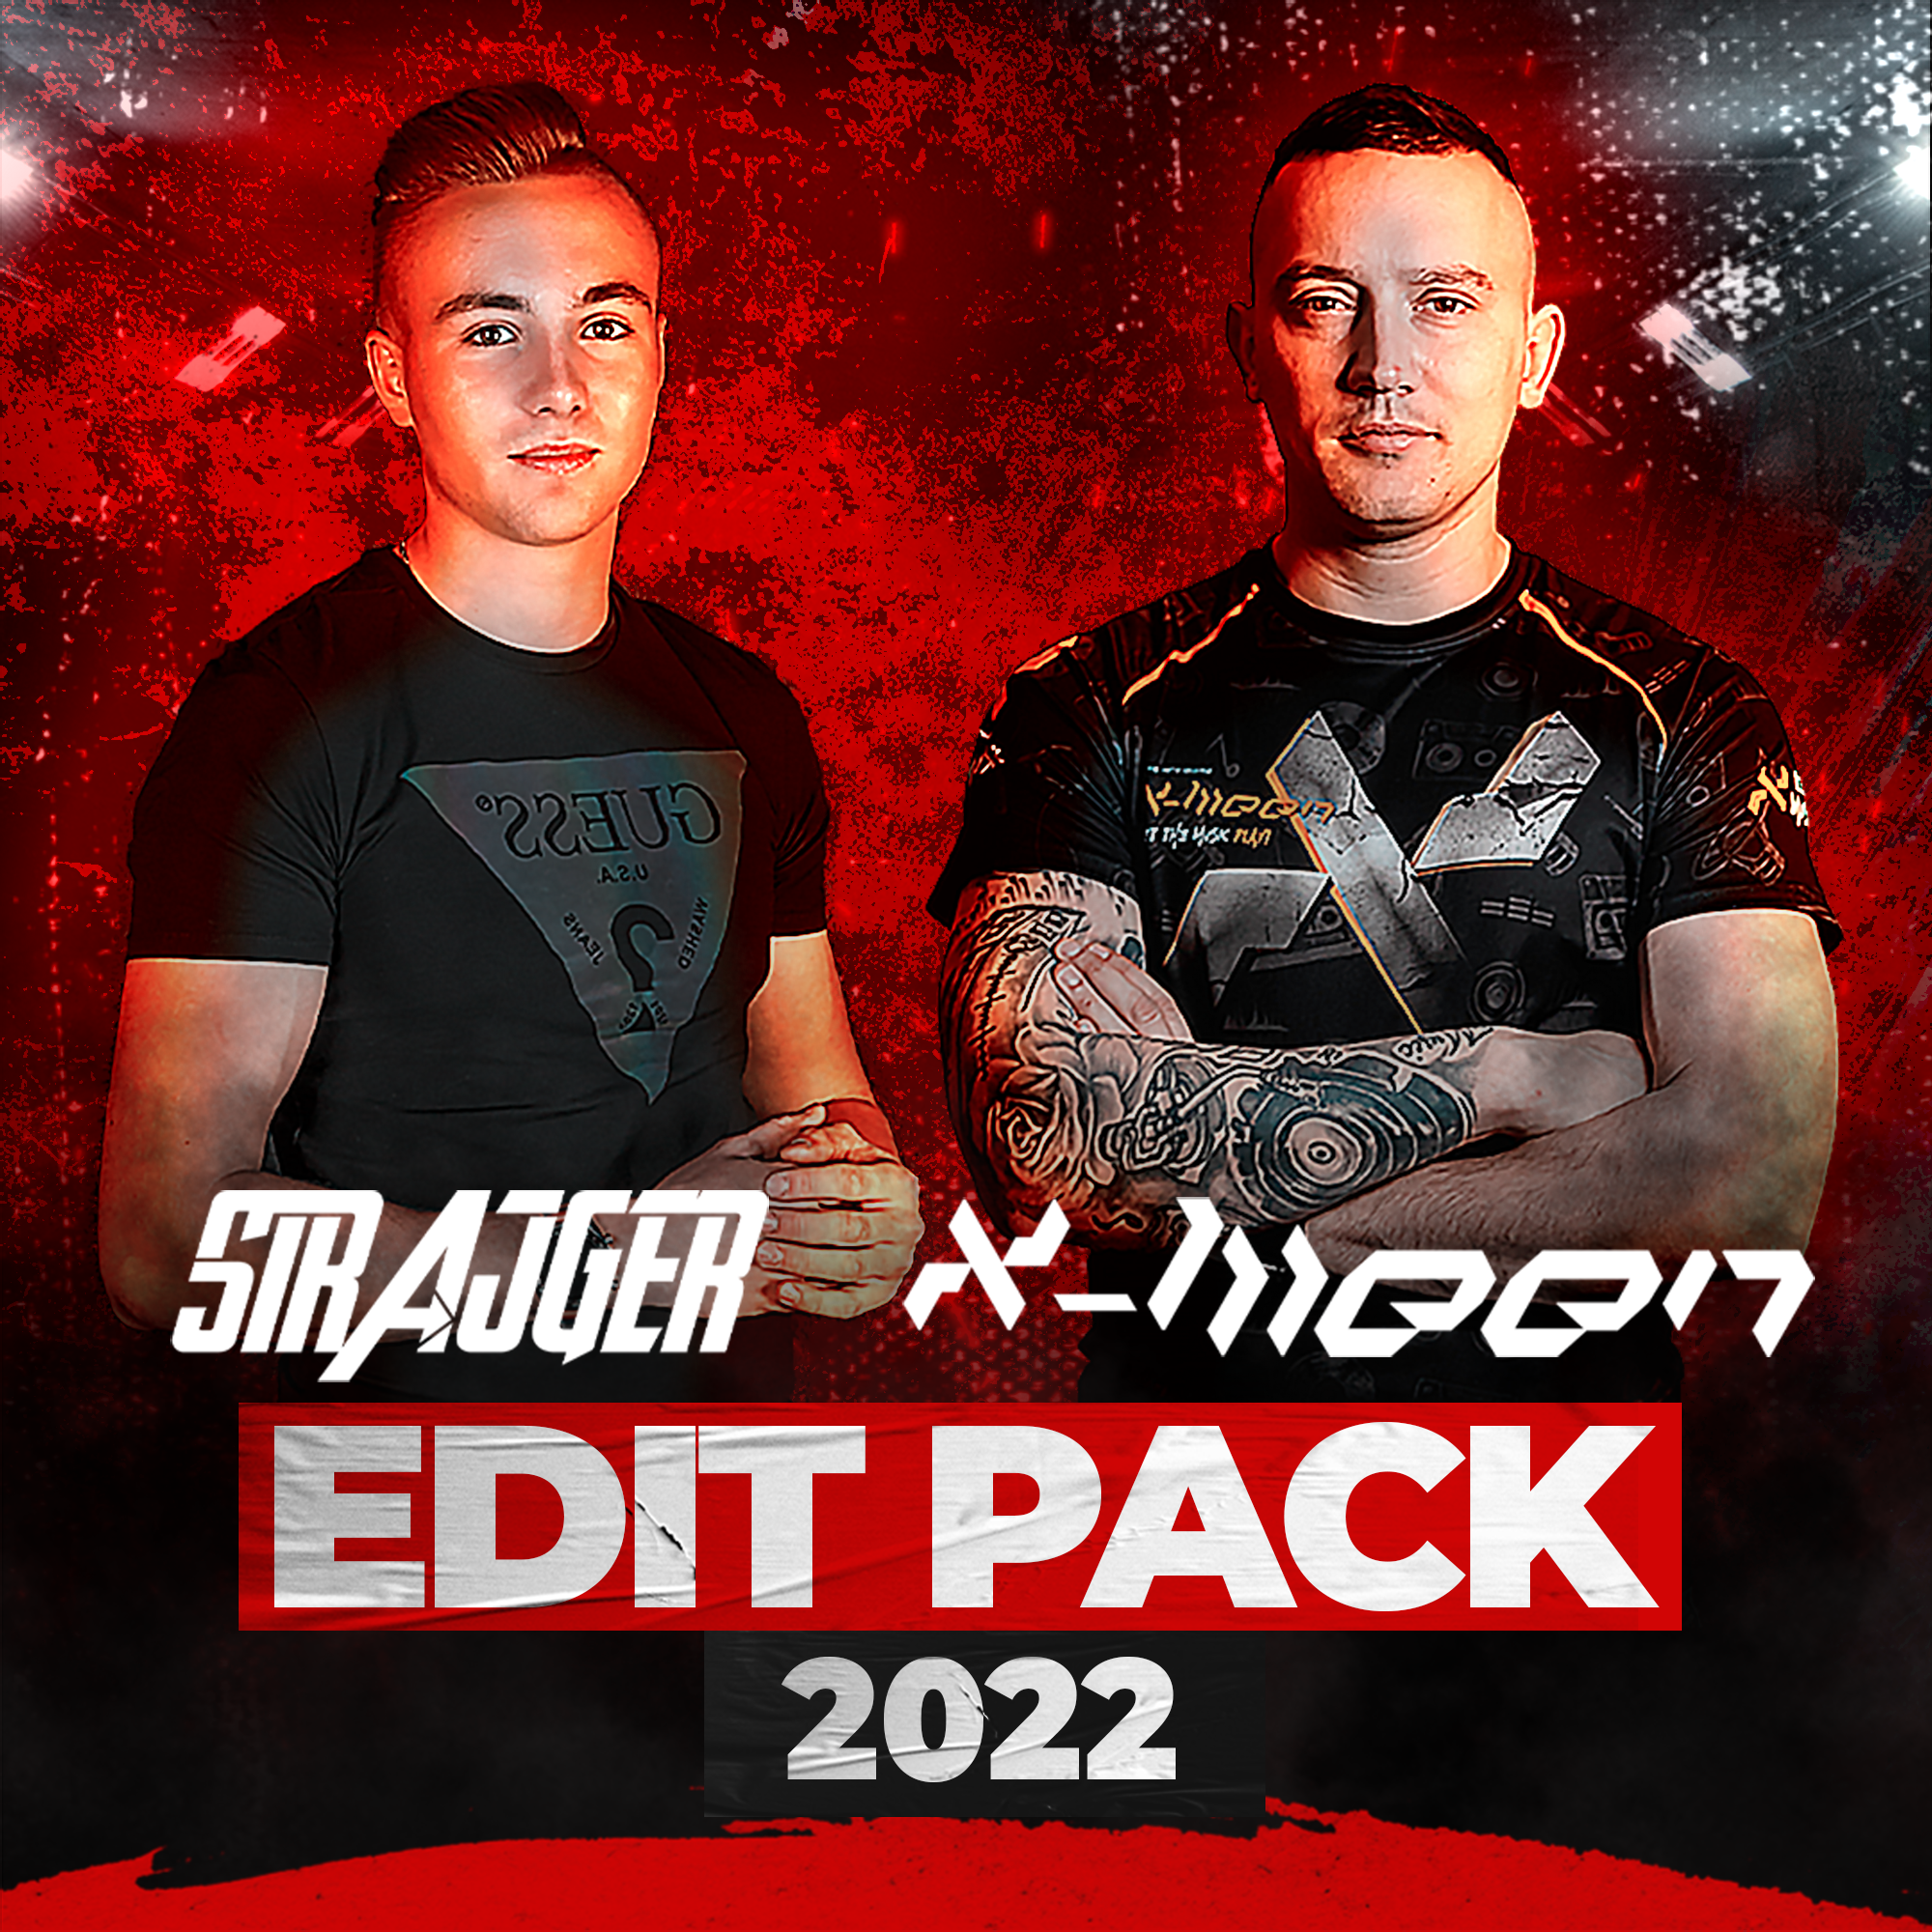 StrajGer & X-Meen Edit Pack 2022